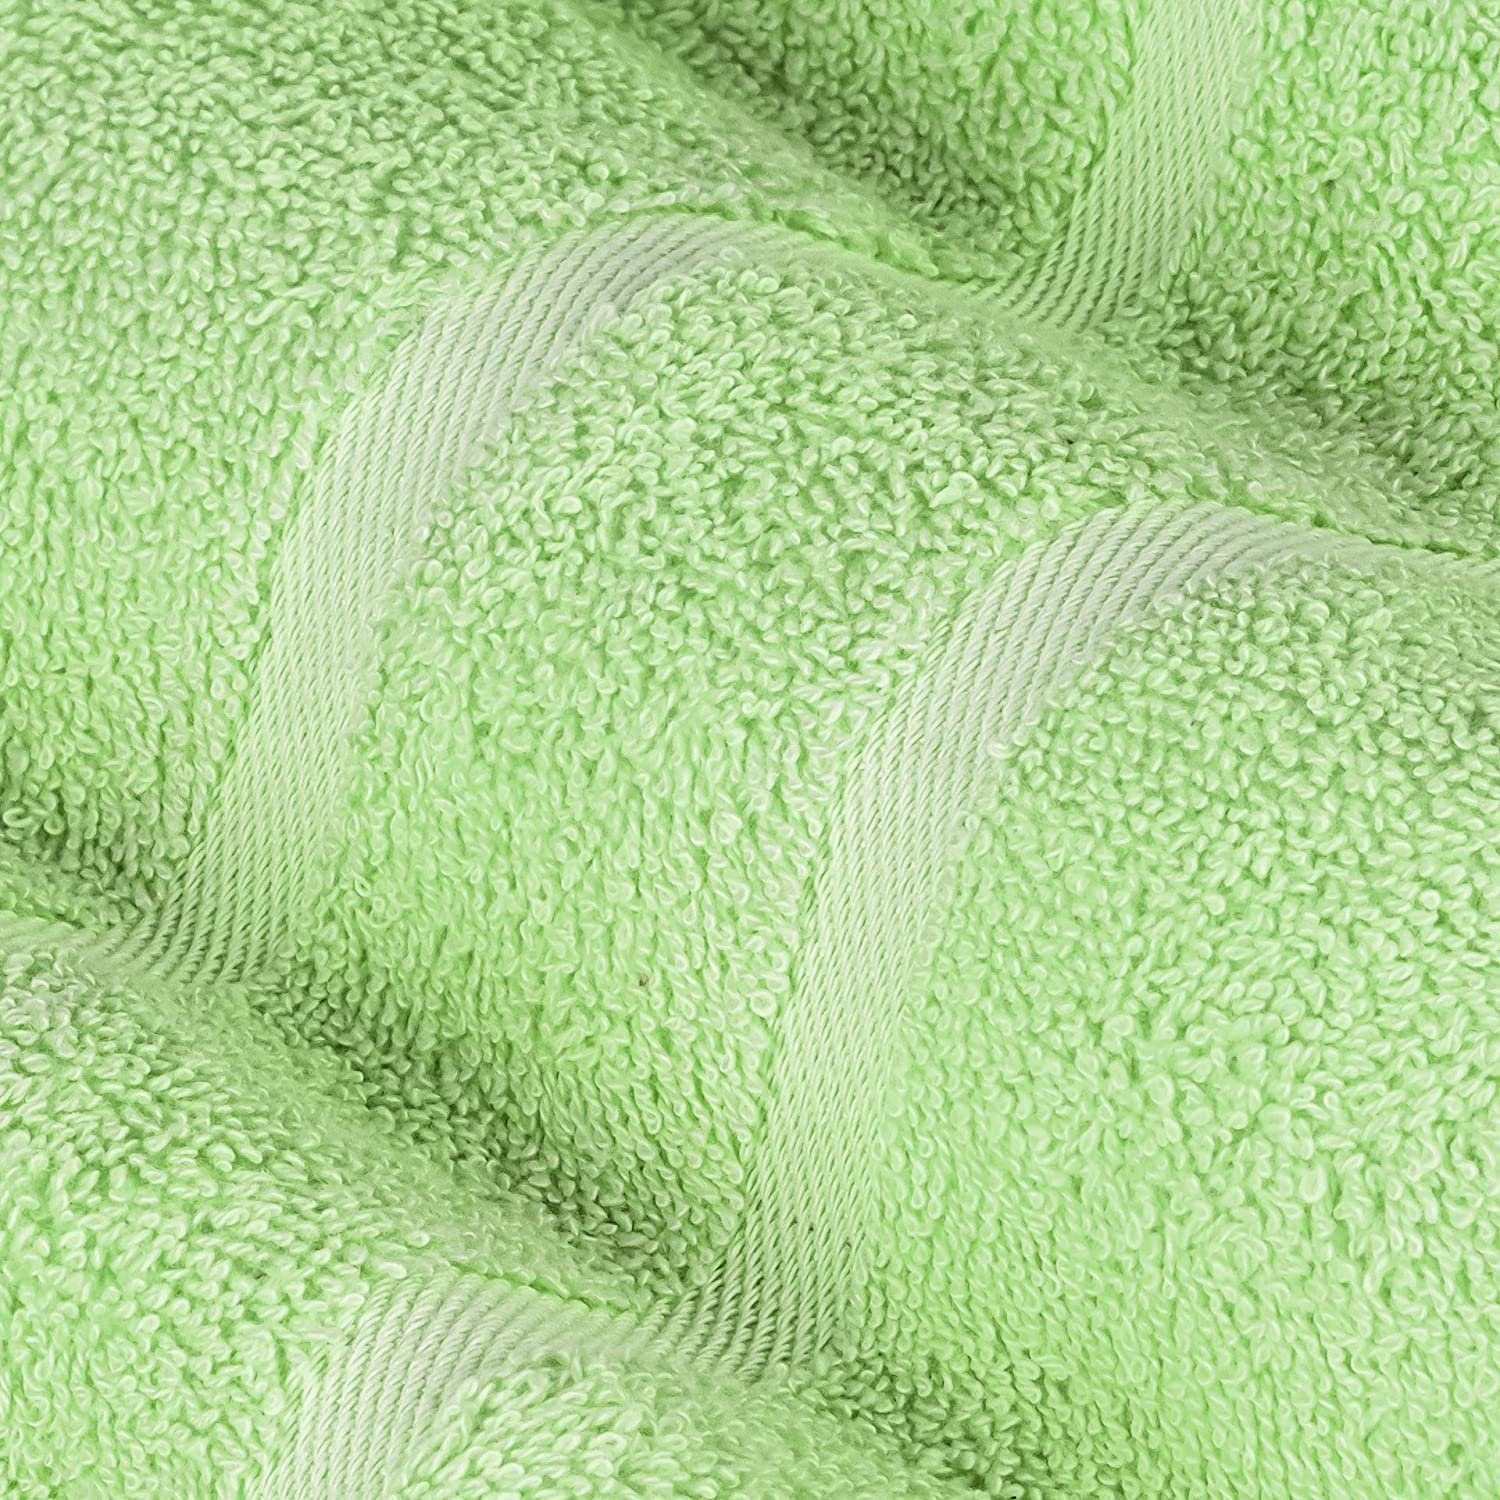 StickandShine Handtuch Set 500 verschiedenen (8 2x Handtuch 2x Baumwolle Gästehandtuch Farben 2x Frottee GSM Pack, in GSM SET 2x 100% Baumwolle Badetücher 500 100% Teilig) Handtücher Duschtücher Hellgrün 8er als